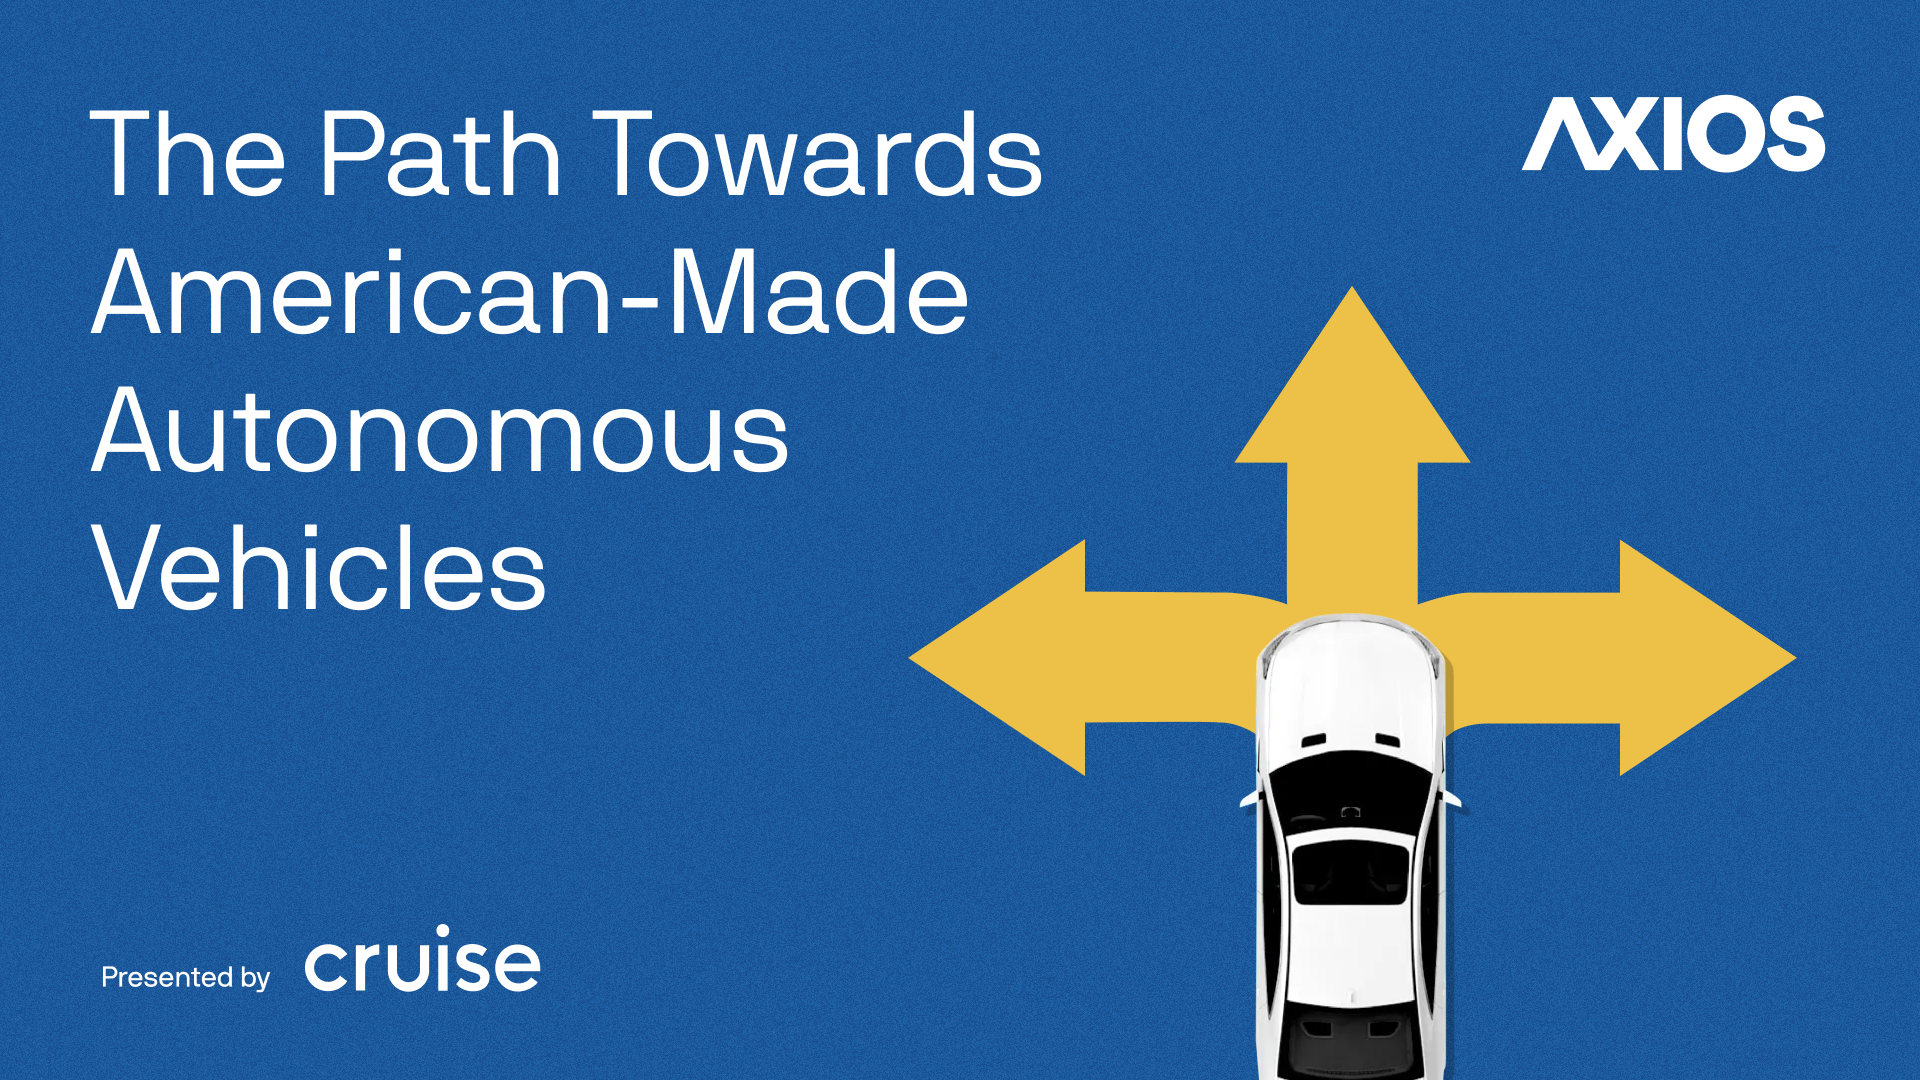 The Path Towards American-Made Autonomous Vehicles